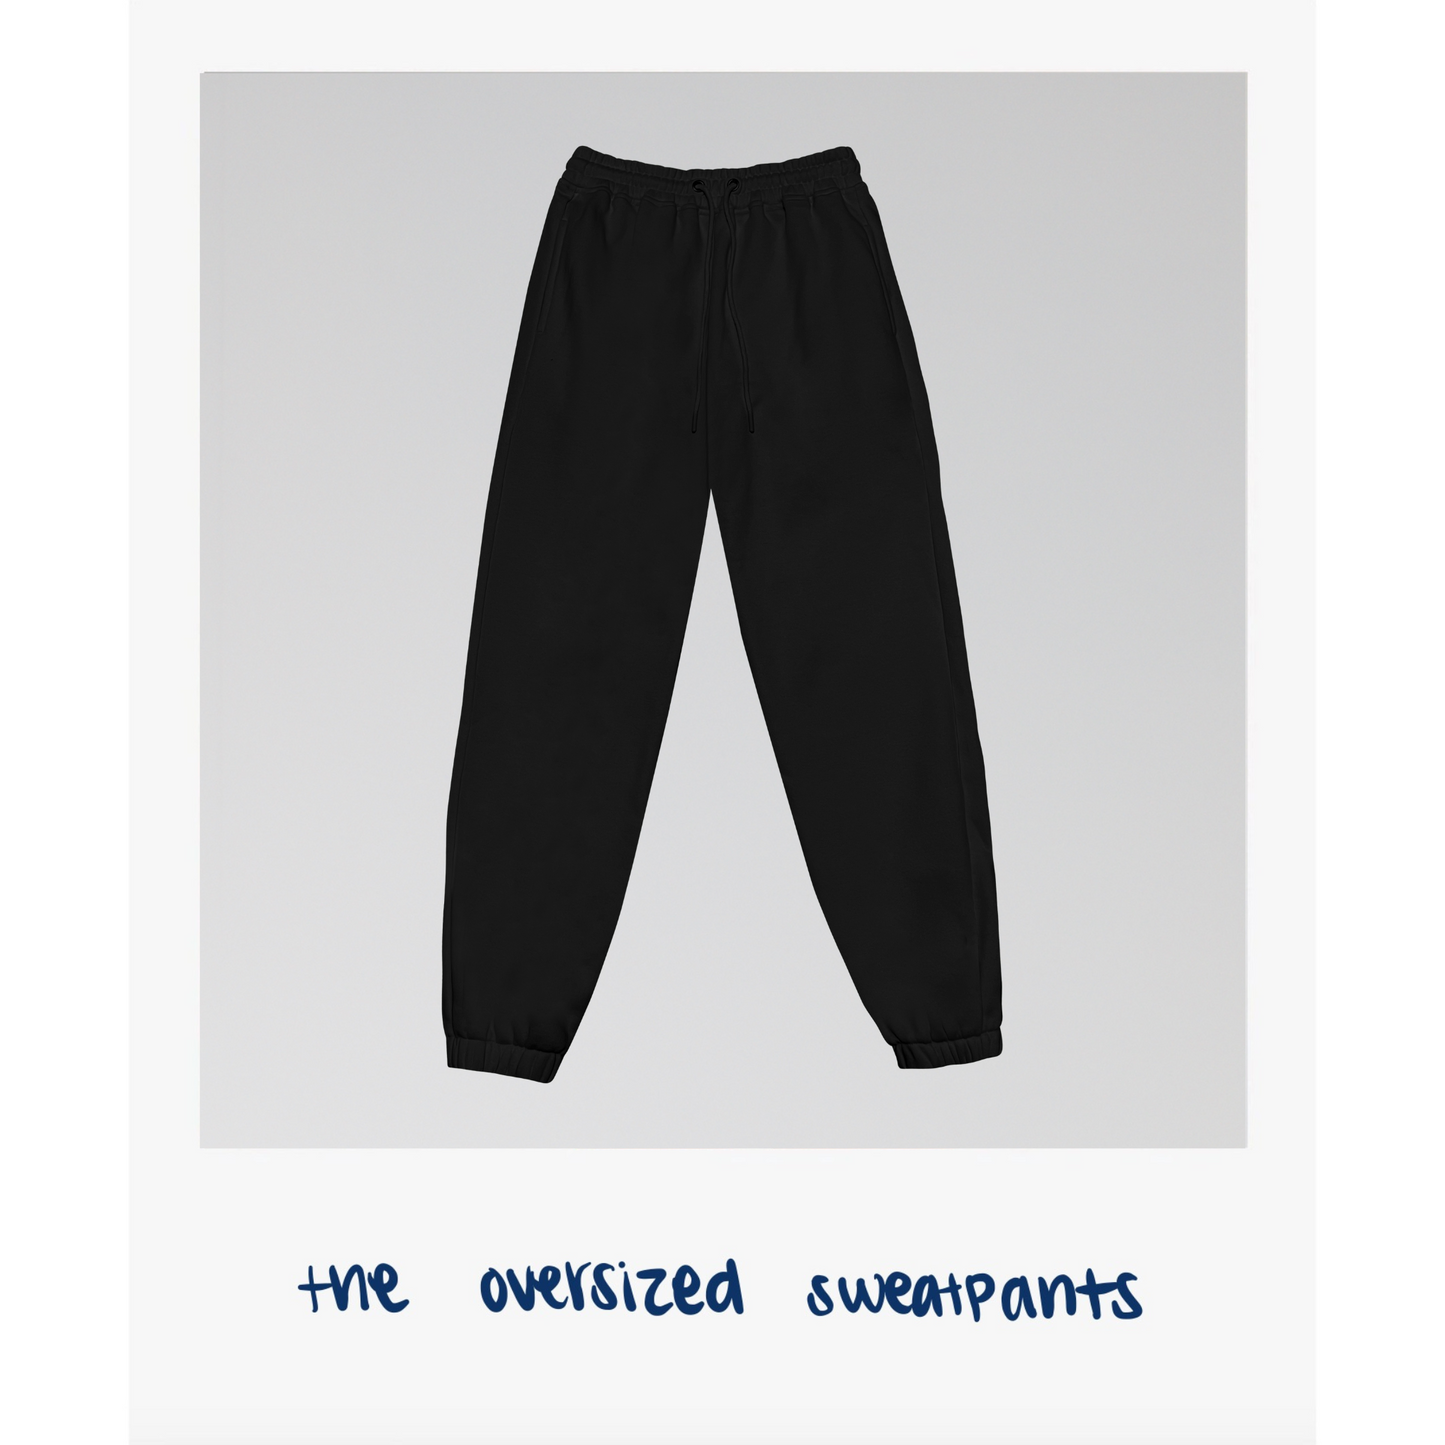 The Oversized Sweatpants